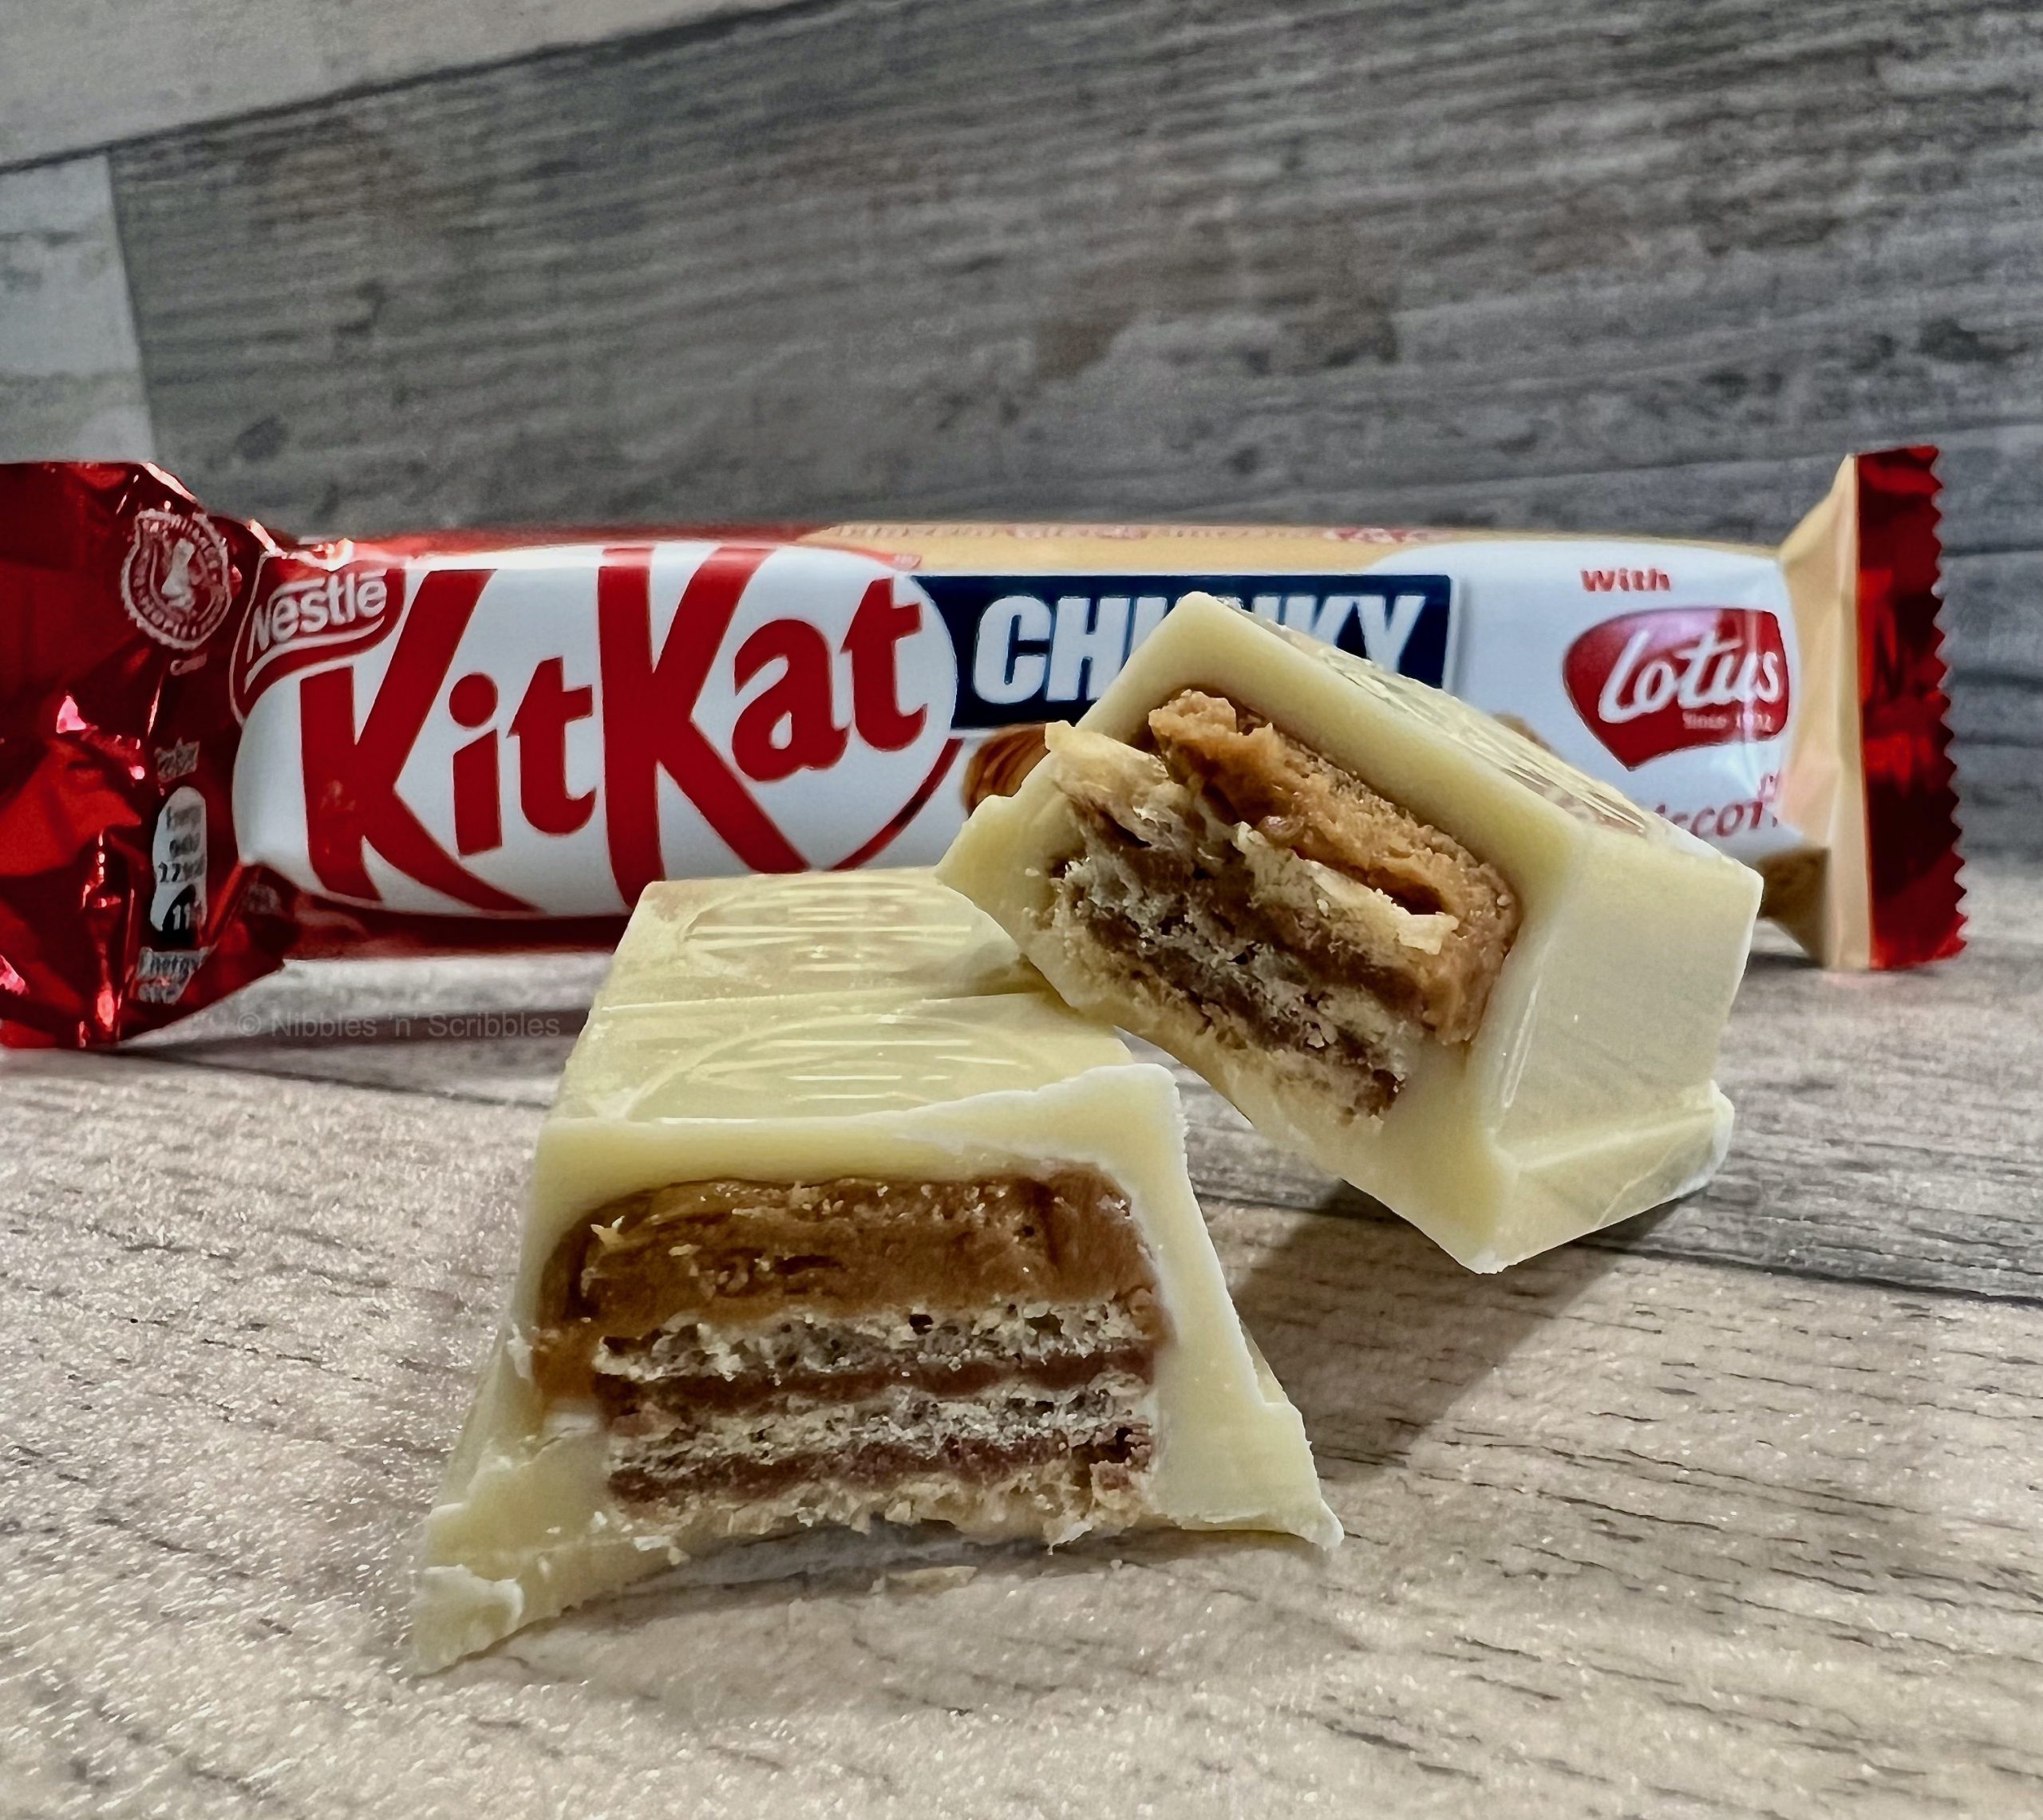 White Lotus Biscoff KitKat Chunky Review